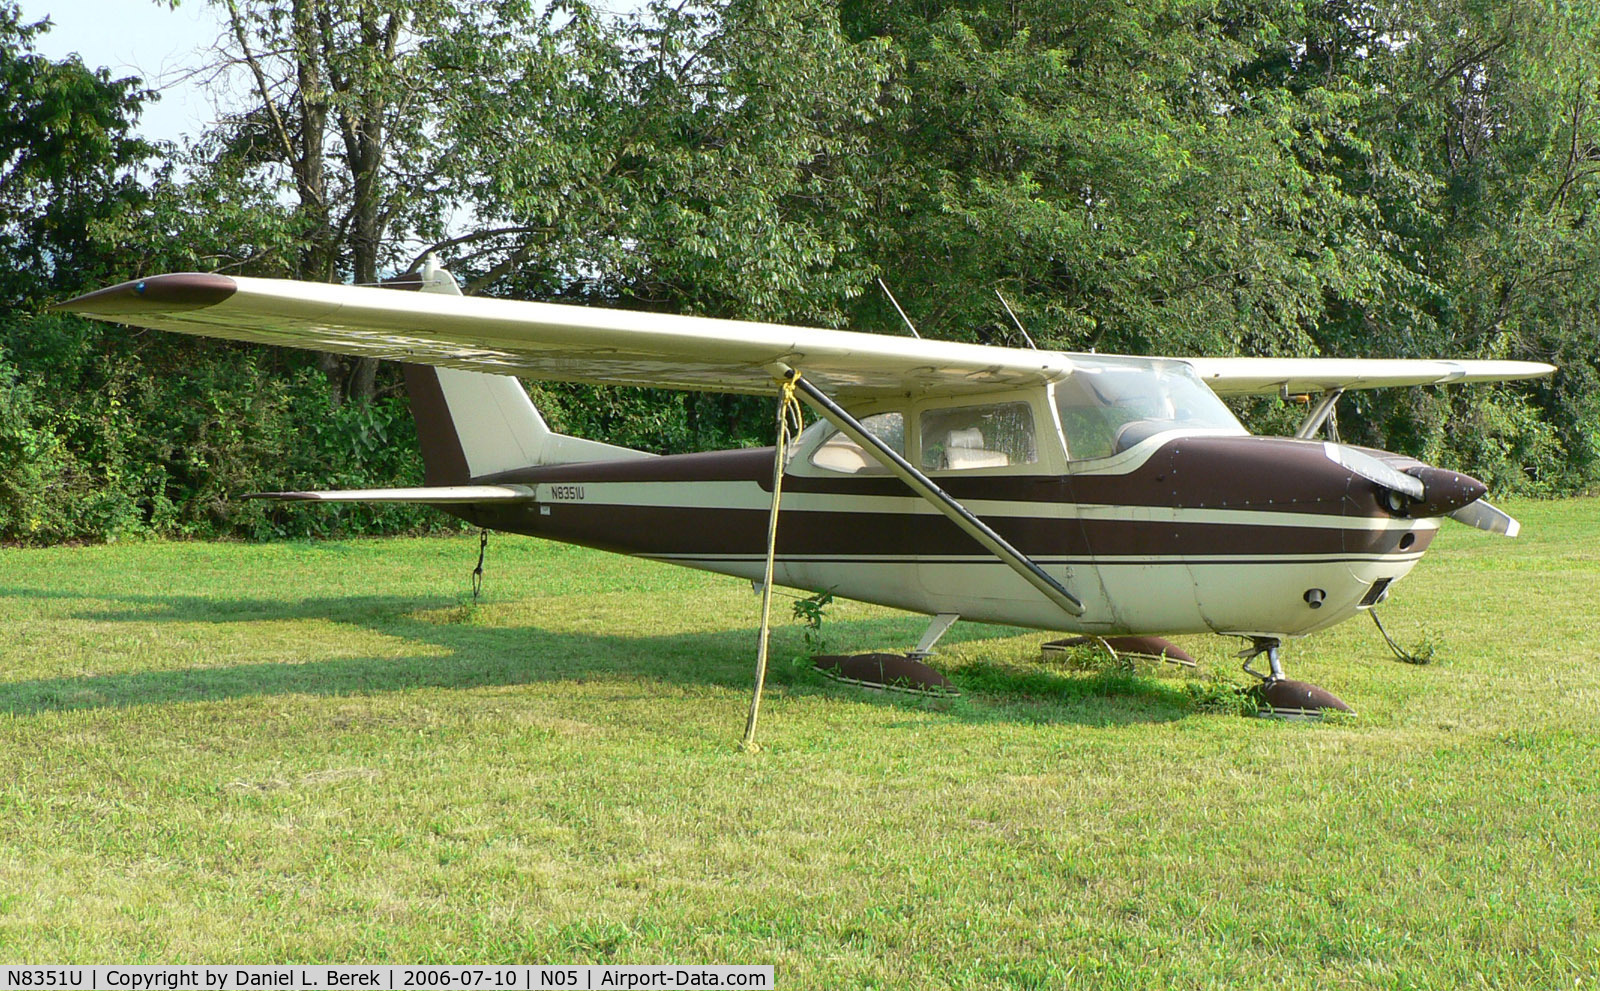 N8351U, 1964 Cessna 172F C/N 17252251, Faded 1964 Skyhawk has that sinking feeling....